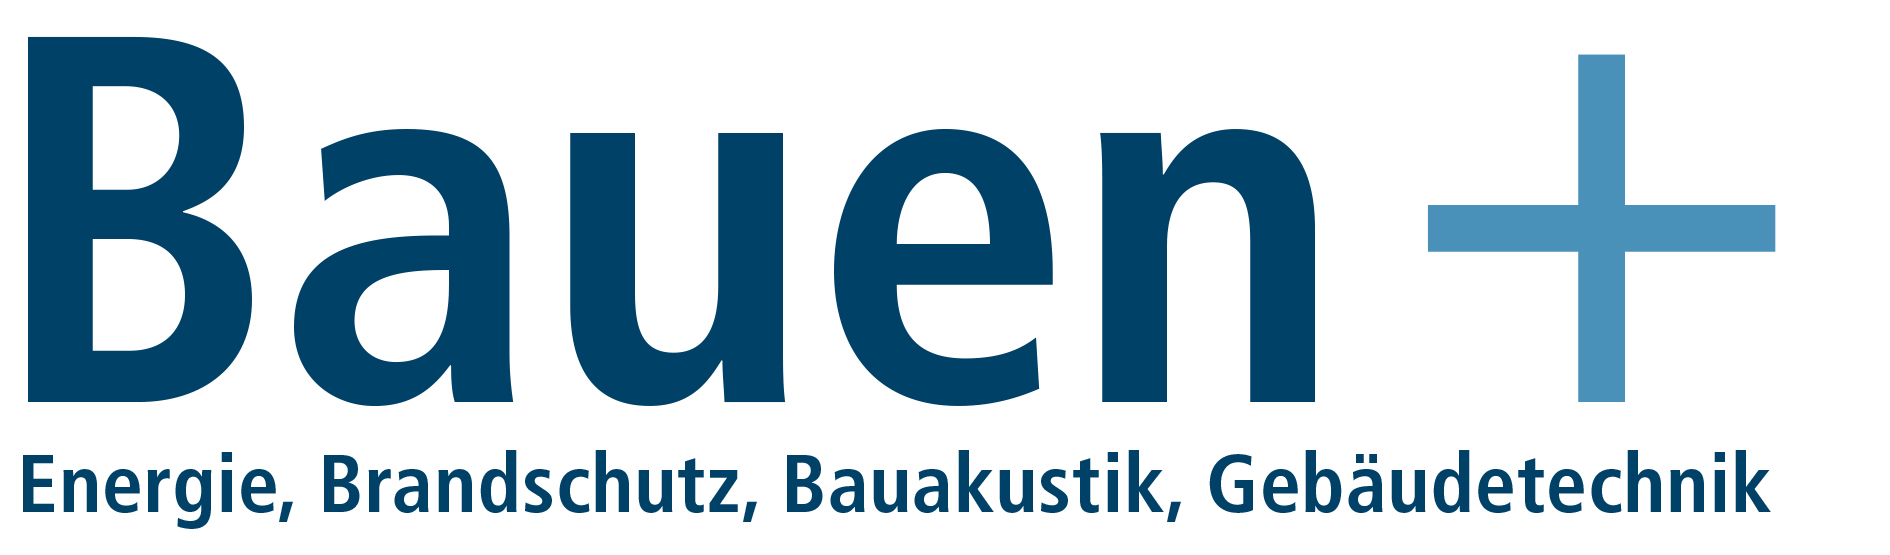 BauenPlus_Logo_blau_Untertitel.jpg